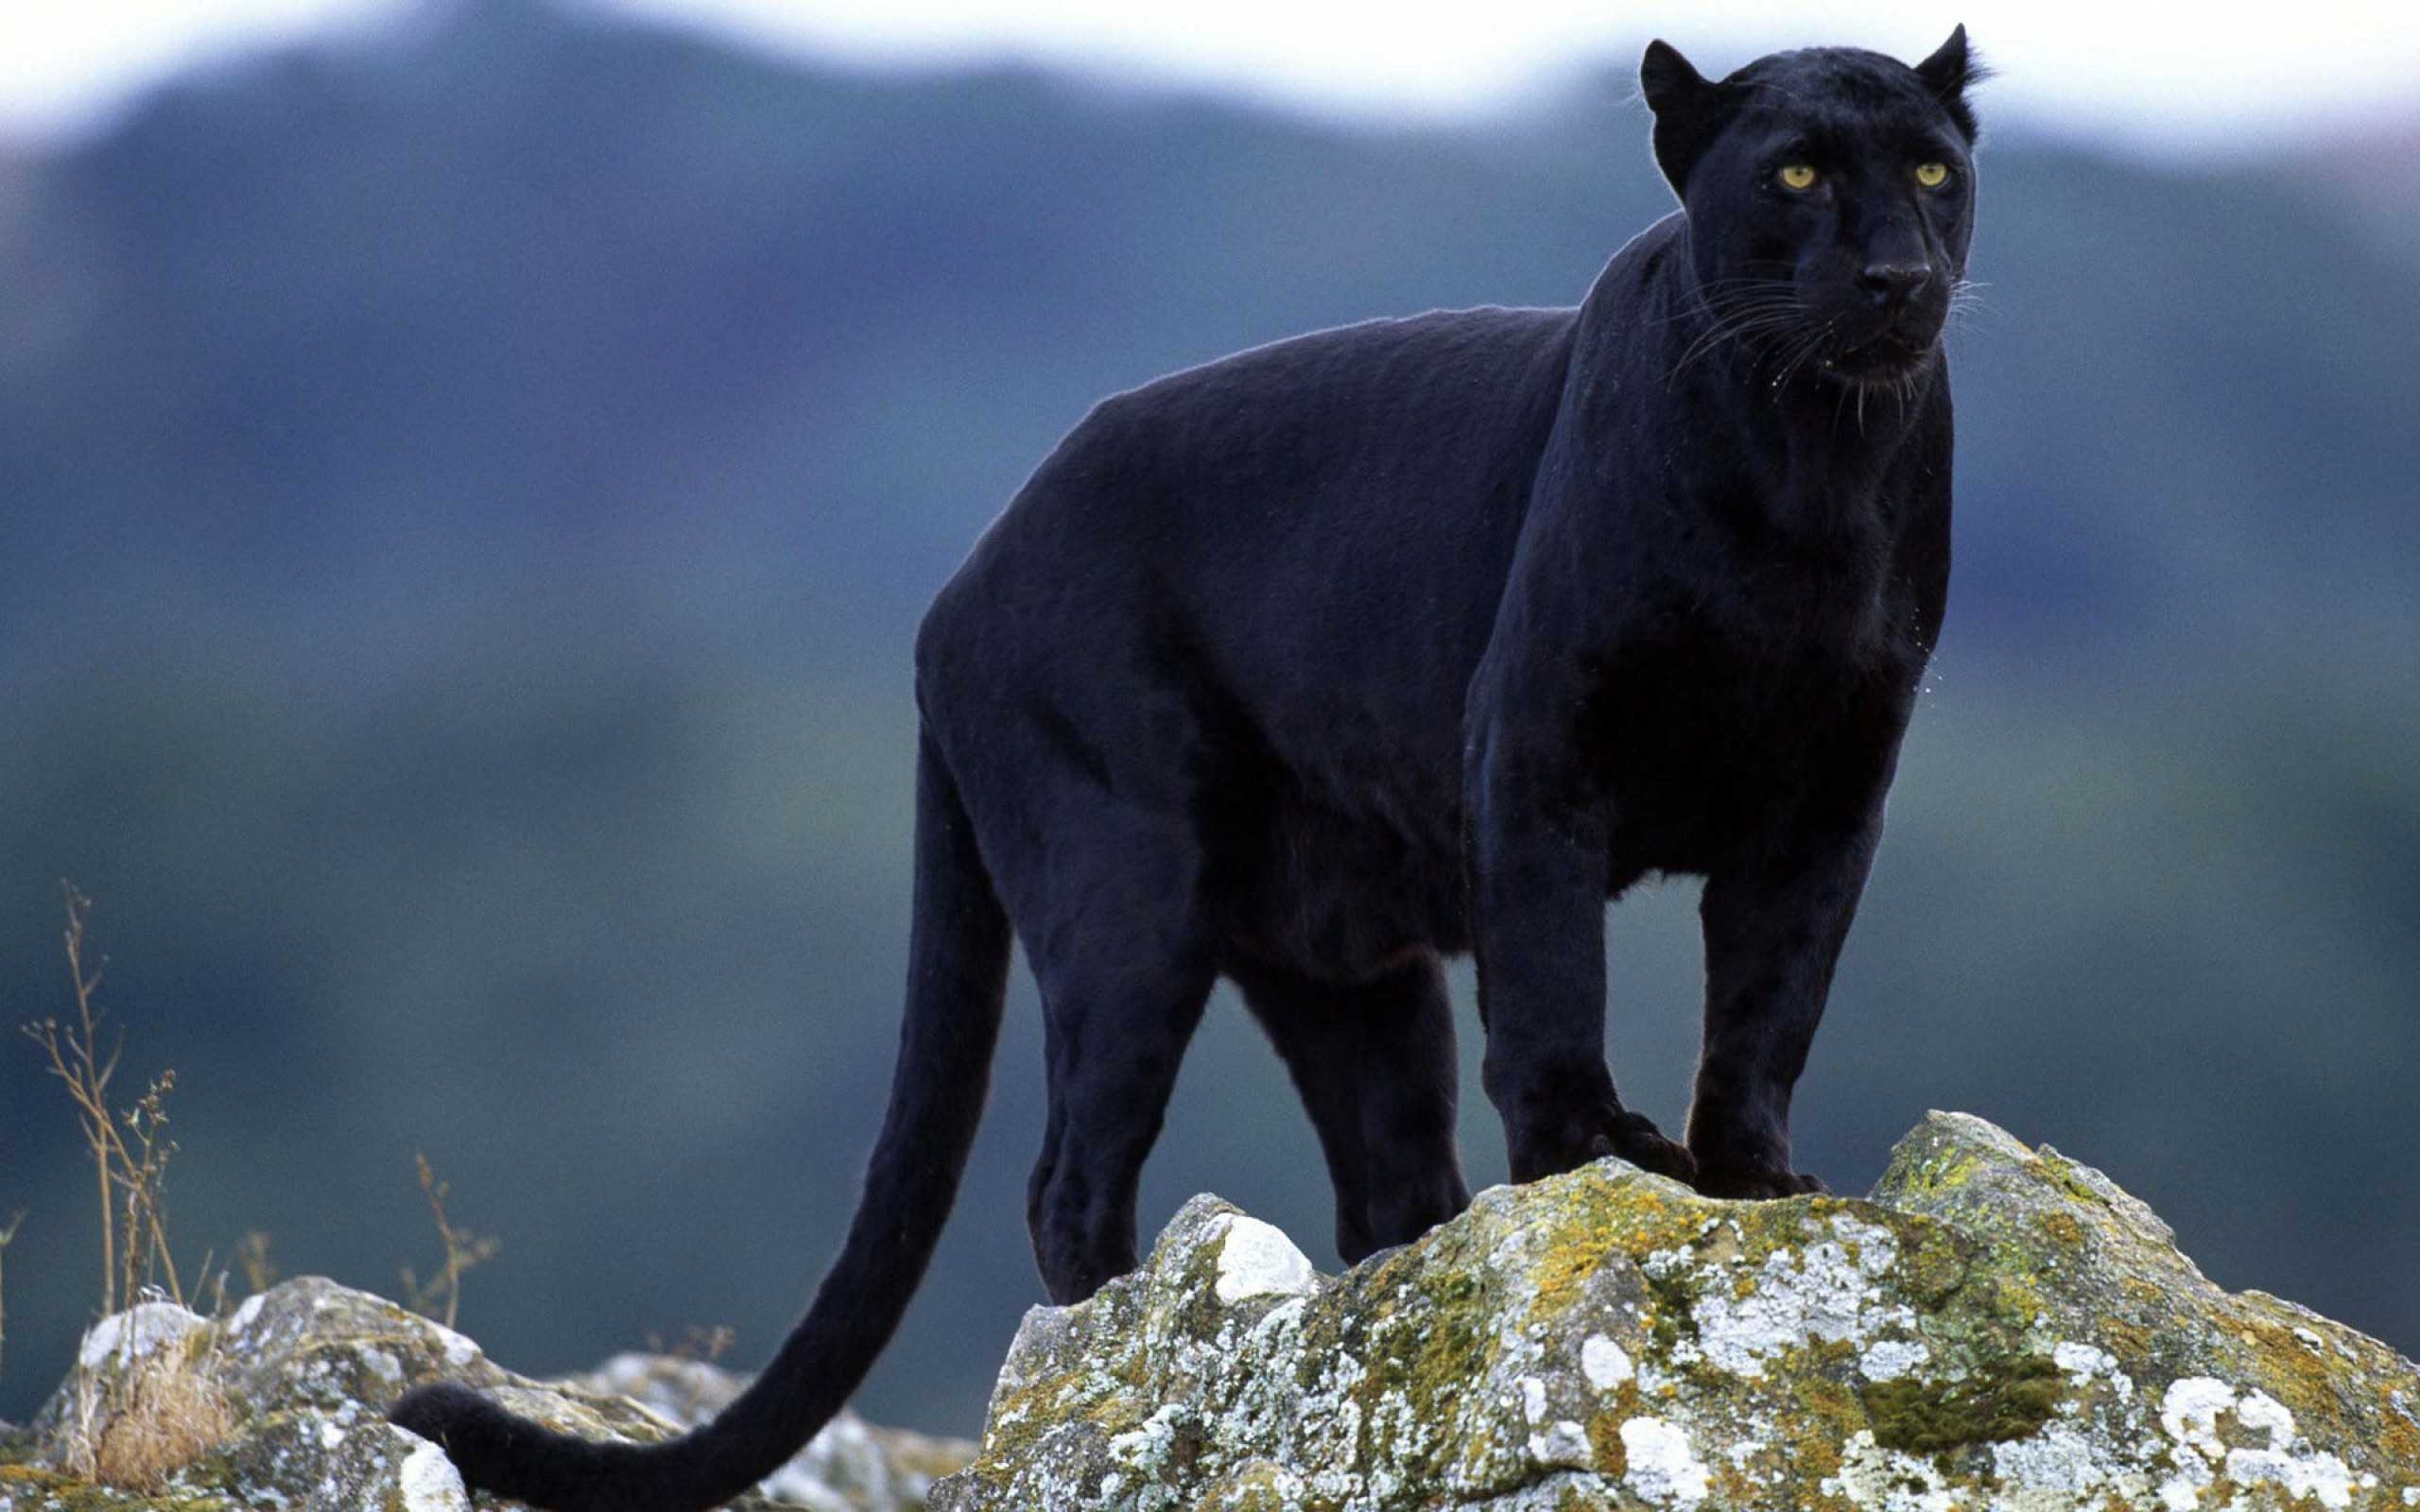 10 Most Popular Image Of Black Jaguar FULL HD 1080p For PC Background